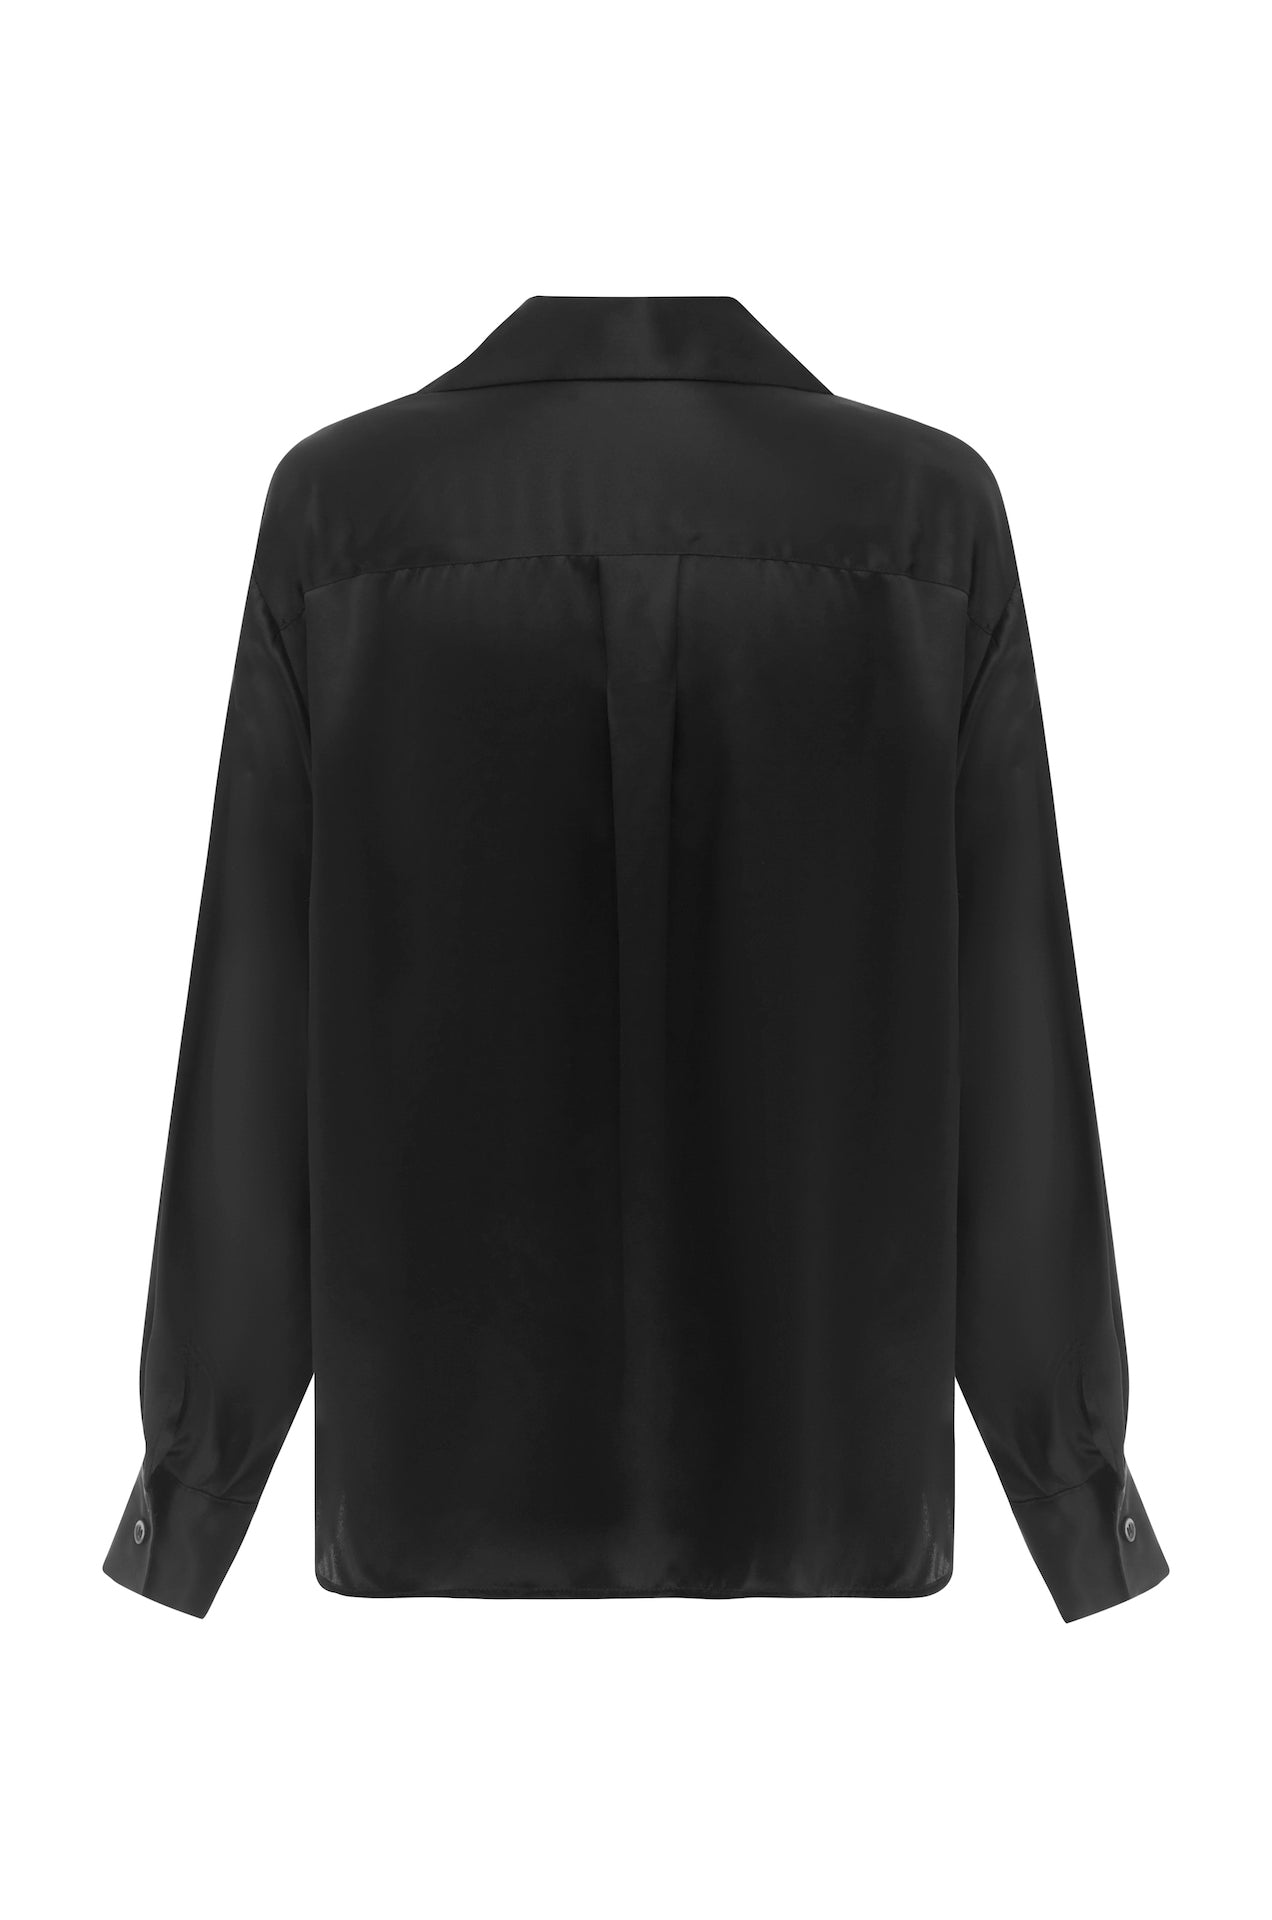 SAINT classic silk shirt in black pure silk. made in Australia. 100% silk satin